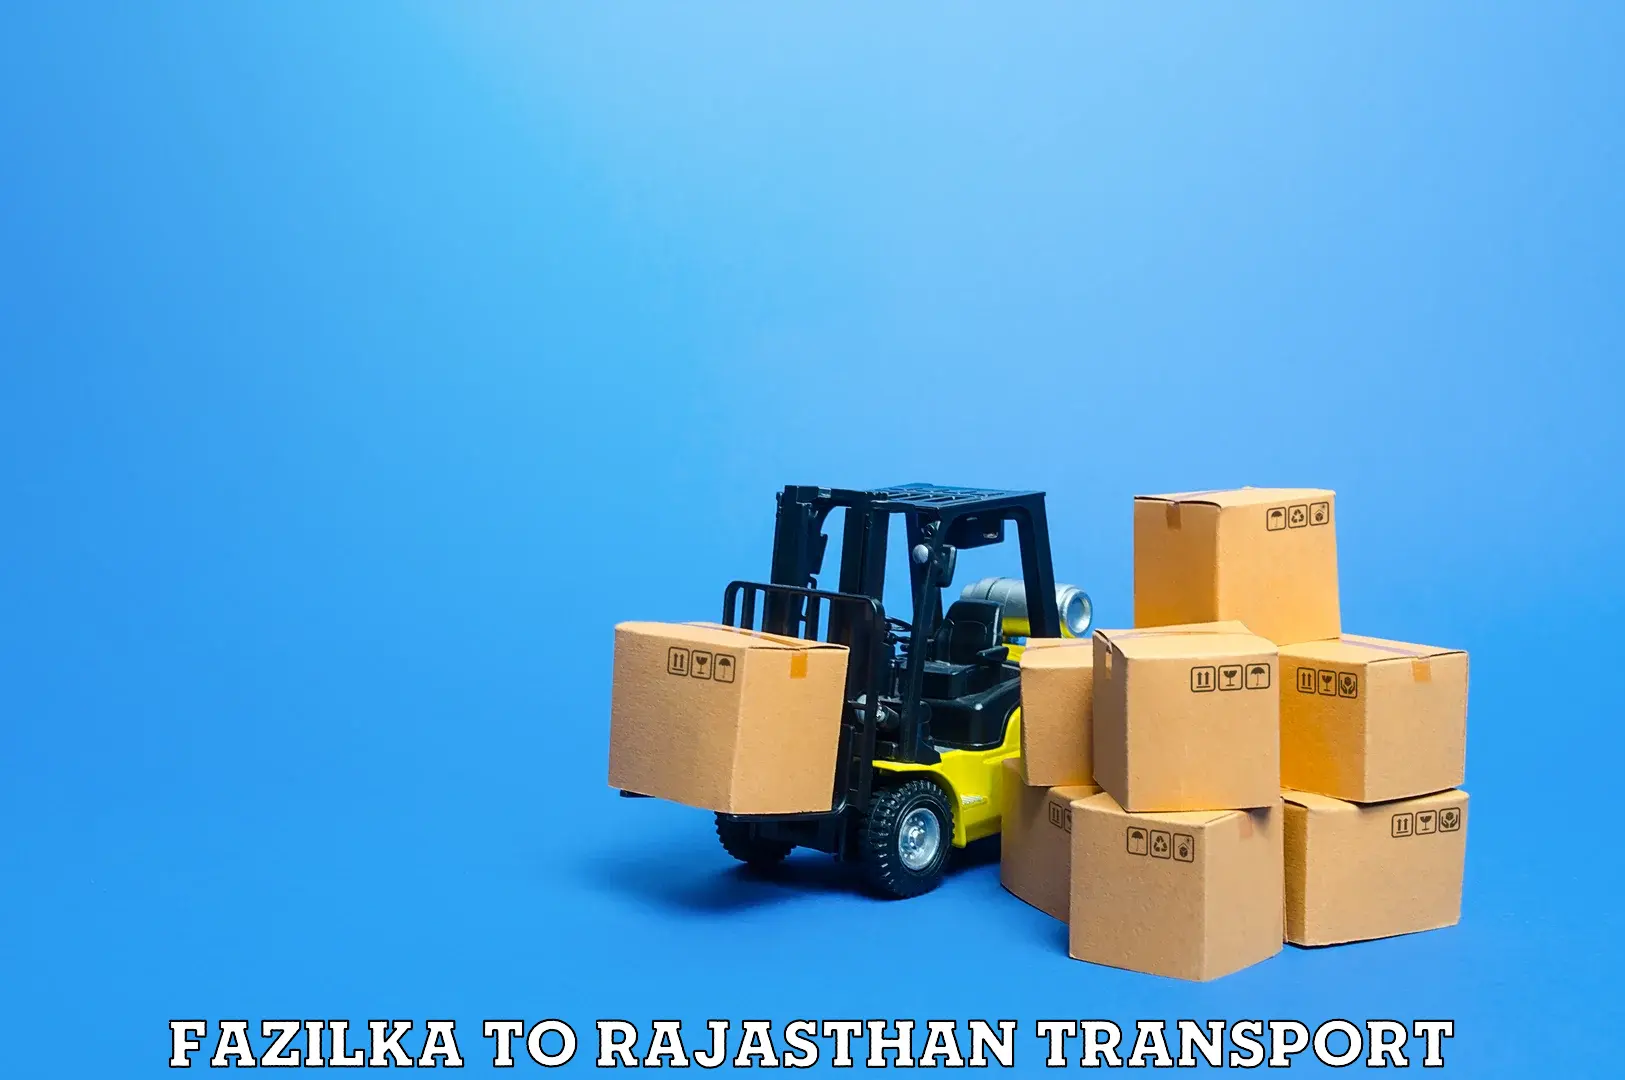 Shipping partner Fazilka to Bikaner